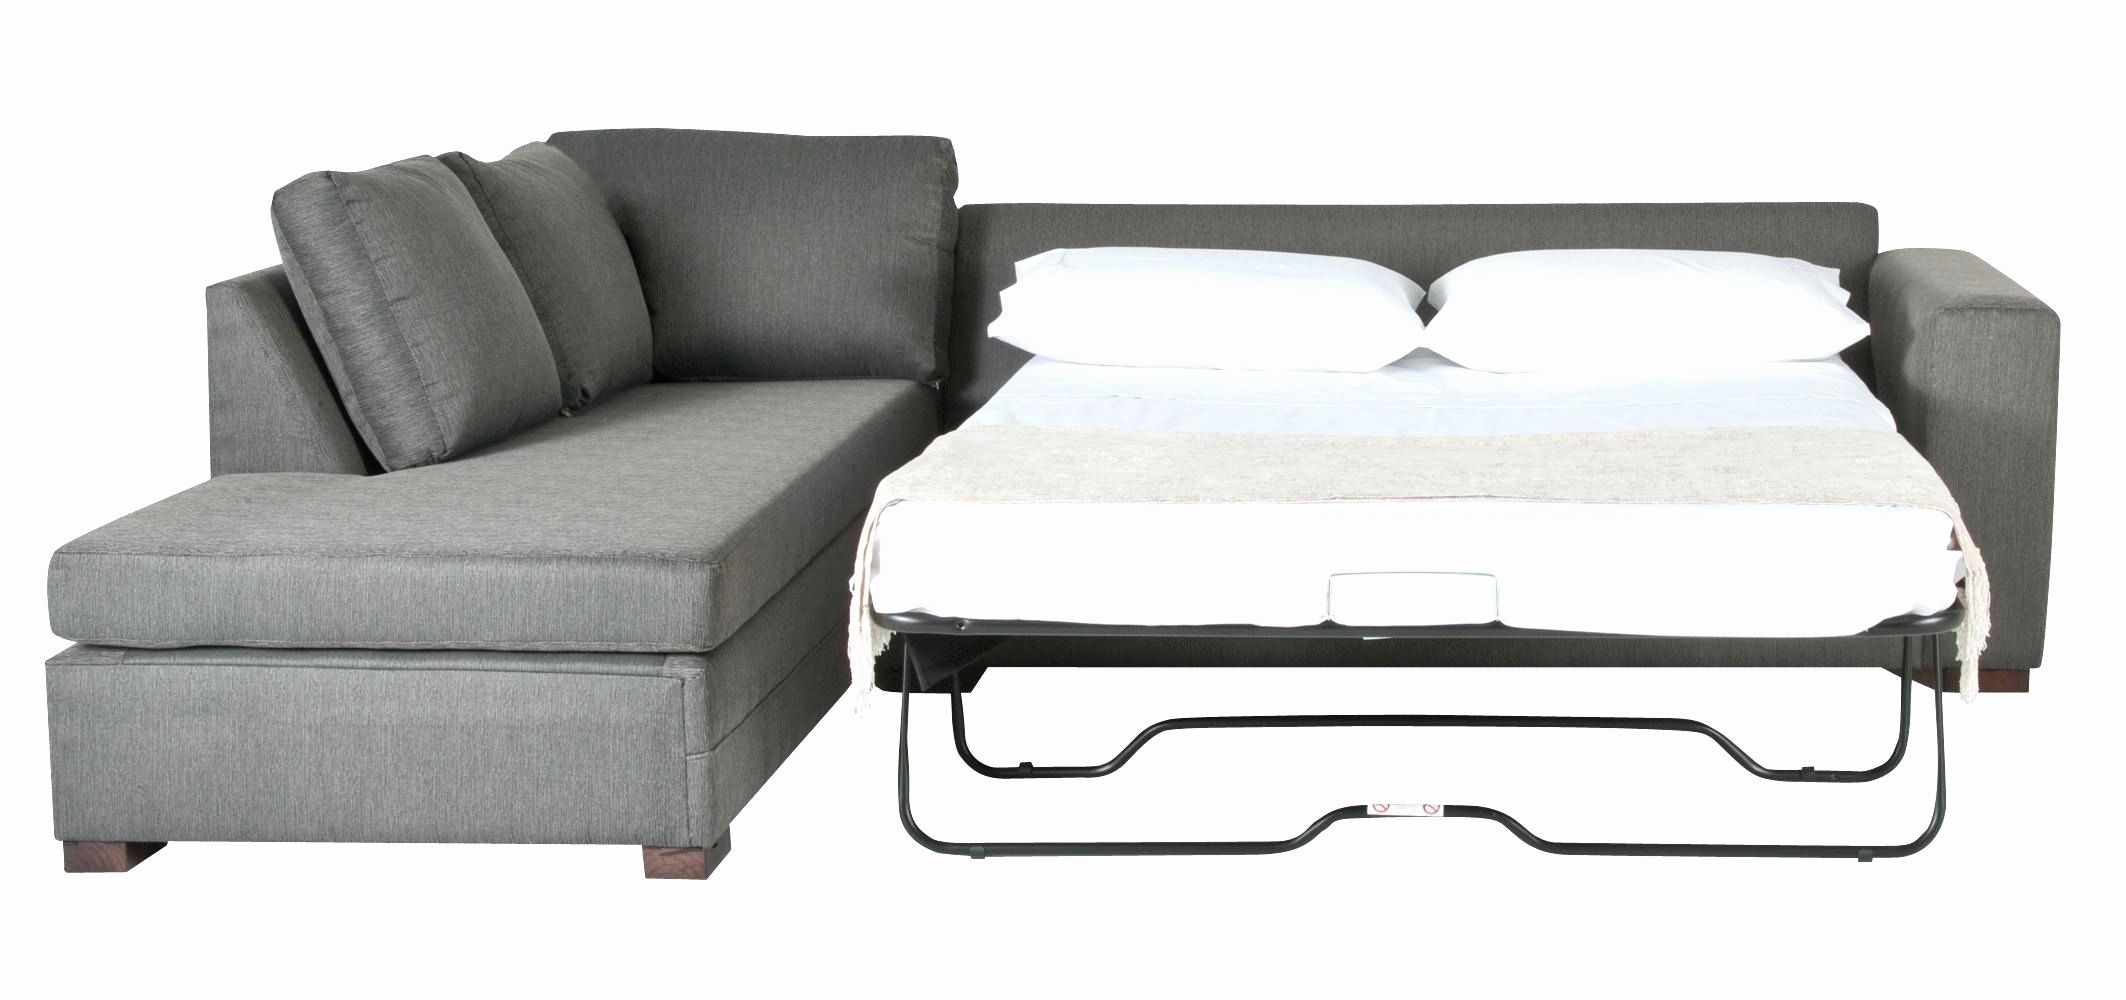 Kijiji Sofa Bed Ottawa | Conceptstructuresllc Within Kijiji Ottawa Sectional Sofas (View 9 of 10)